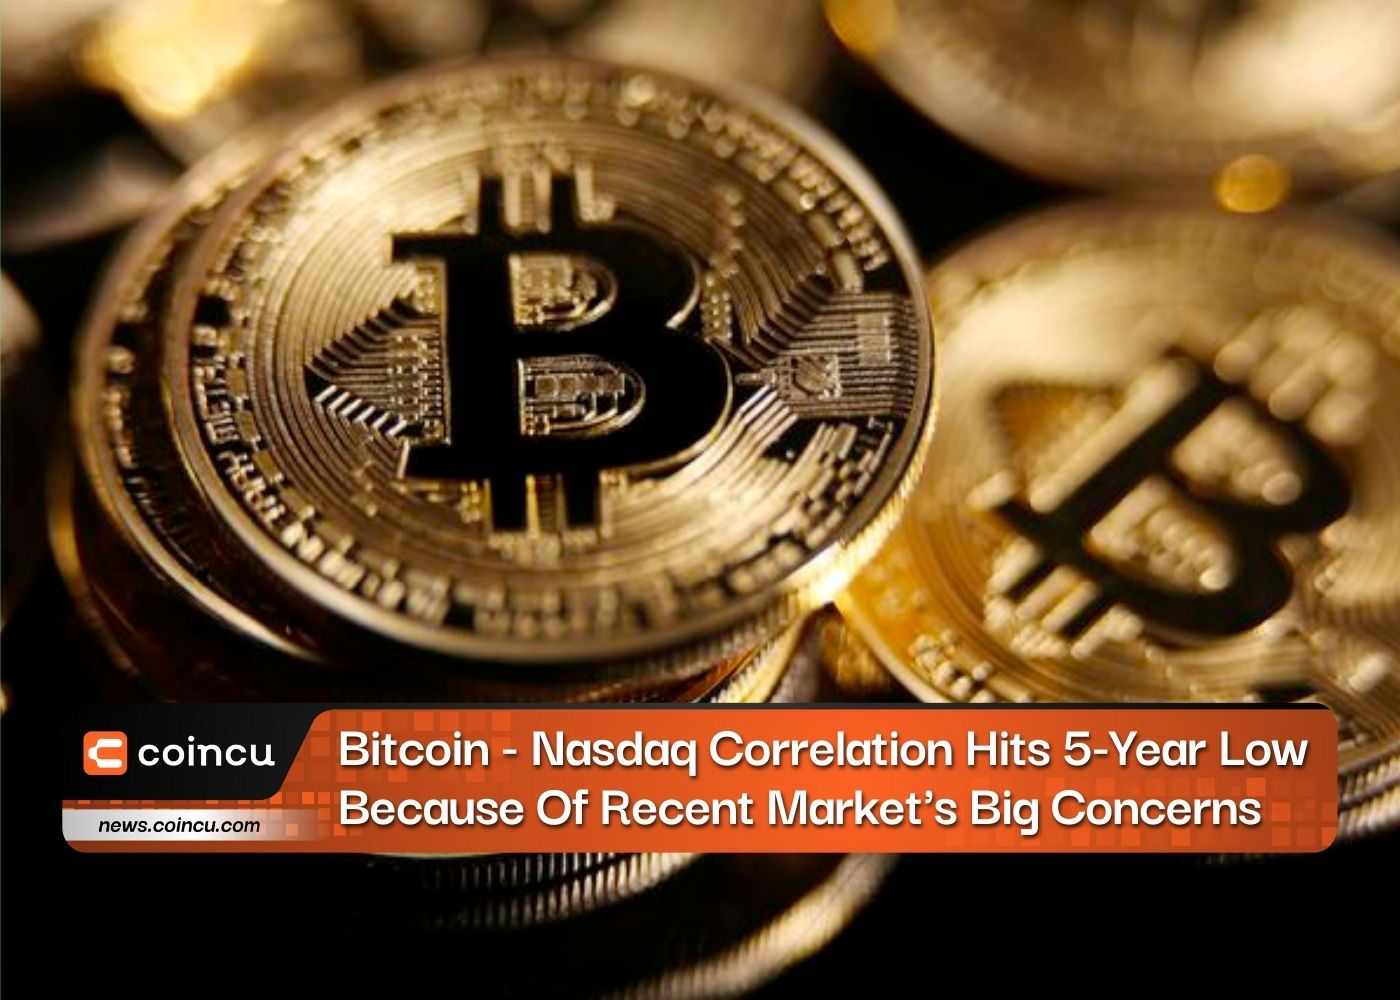 Bitcoin - Nasdaq Correlation Hits 5-Year Low Because Of Recent Market's Big Concerns